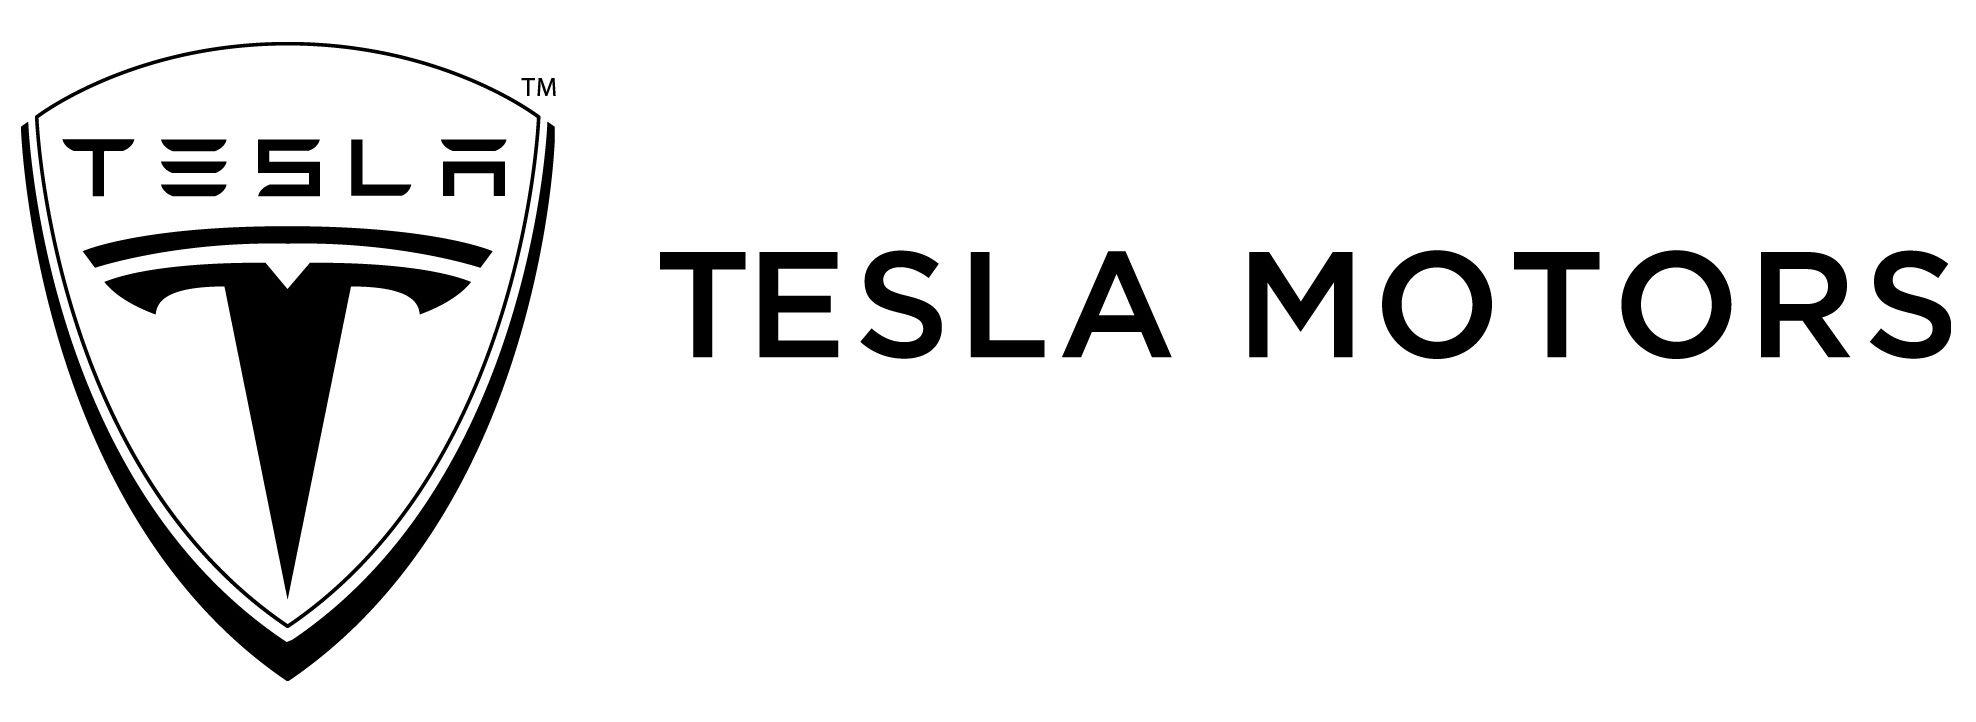 Tesla Motors Logo - Tesla Motors | Cartype